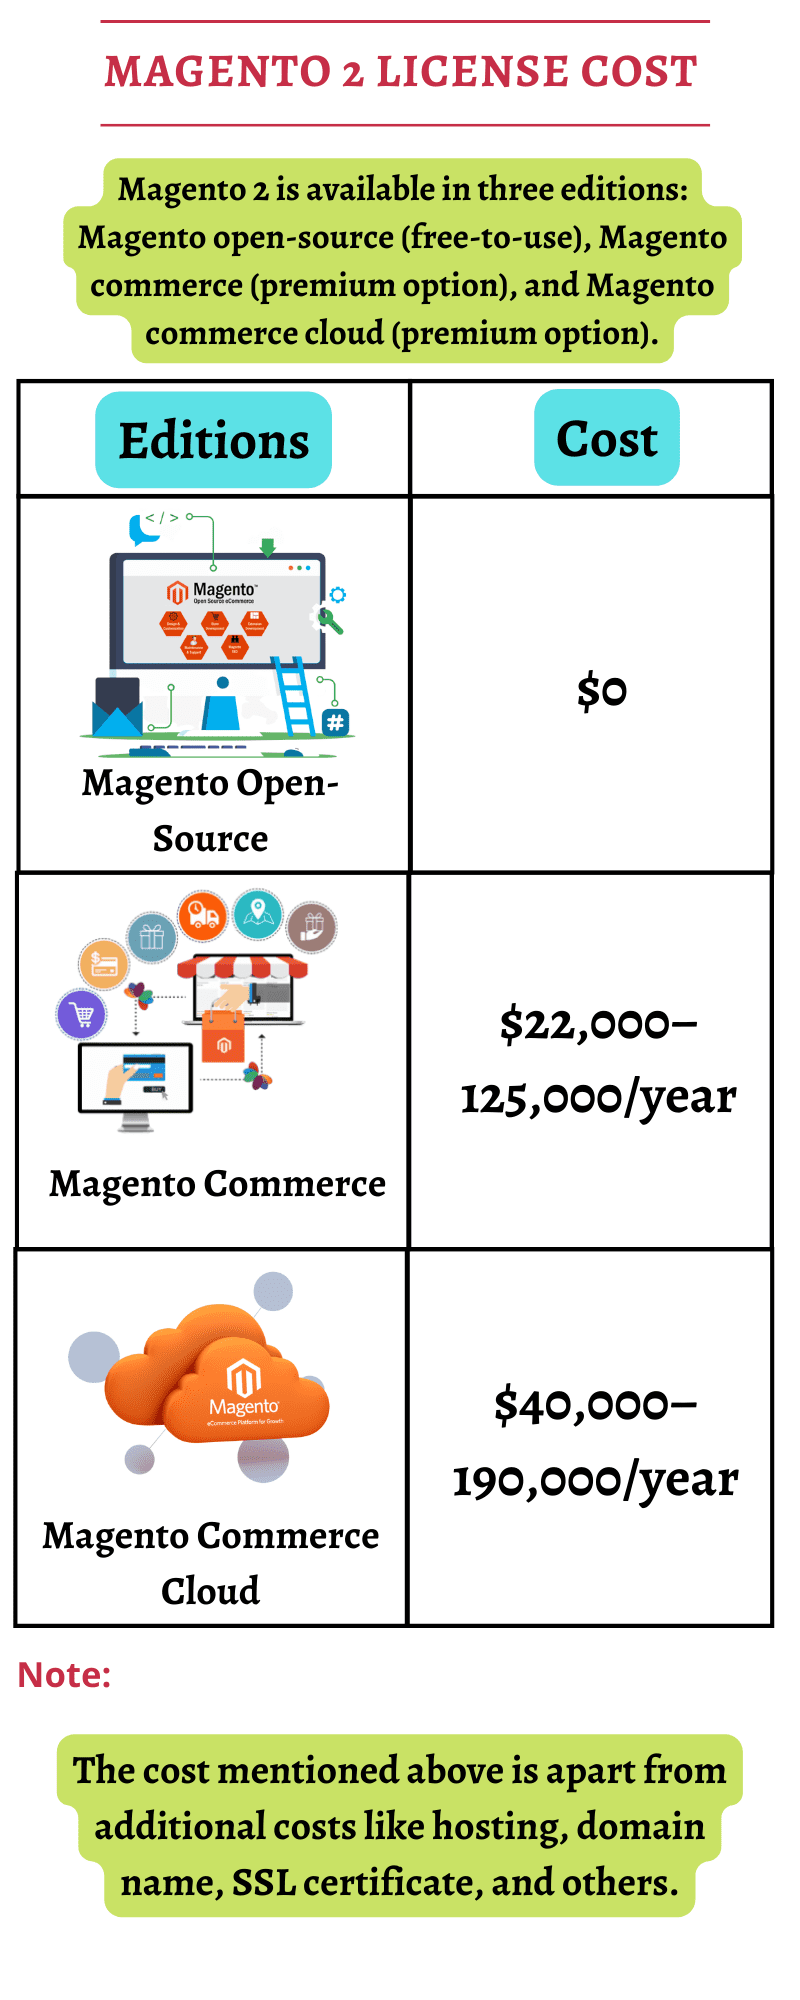 Magento 2 License Cost